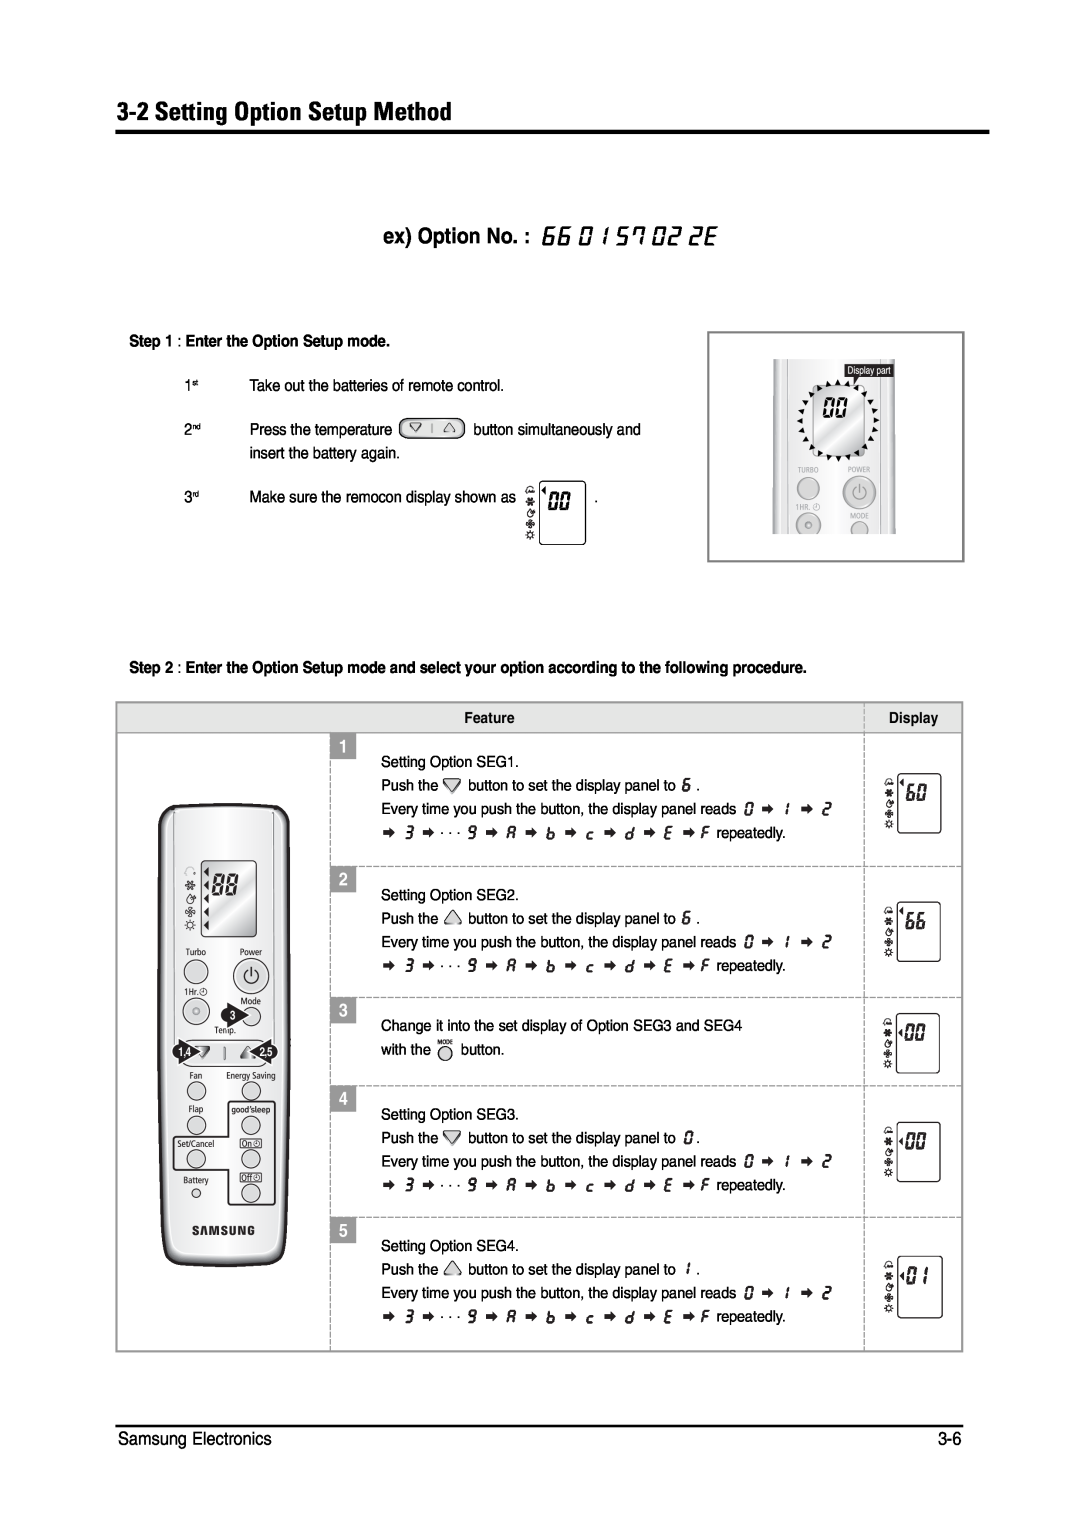 Samsung MH026FNCA service manual 3-2Setting Option Setup Method, ex Option No, Enter the Option Setup mode 